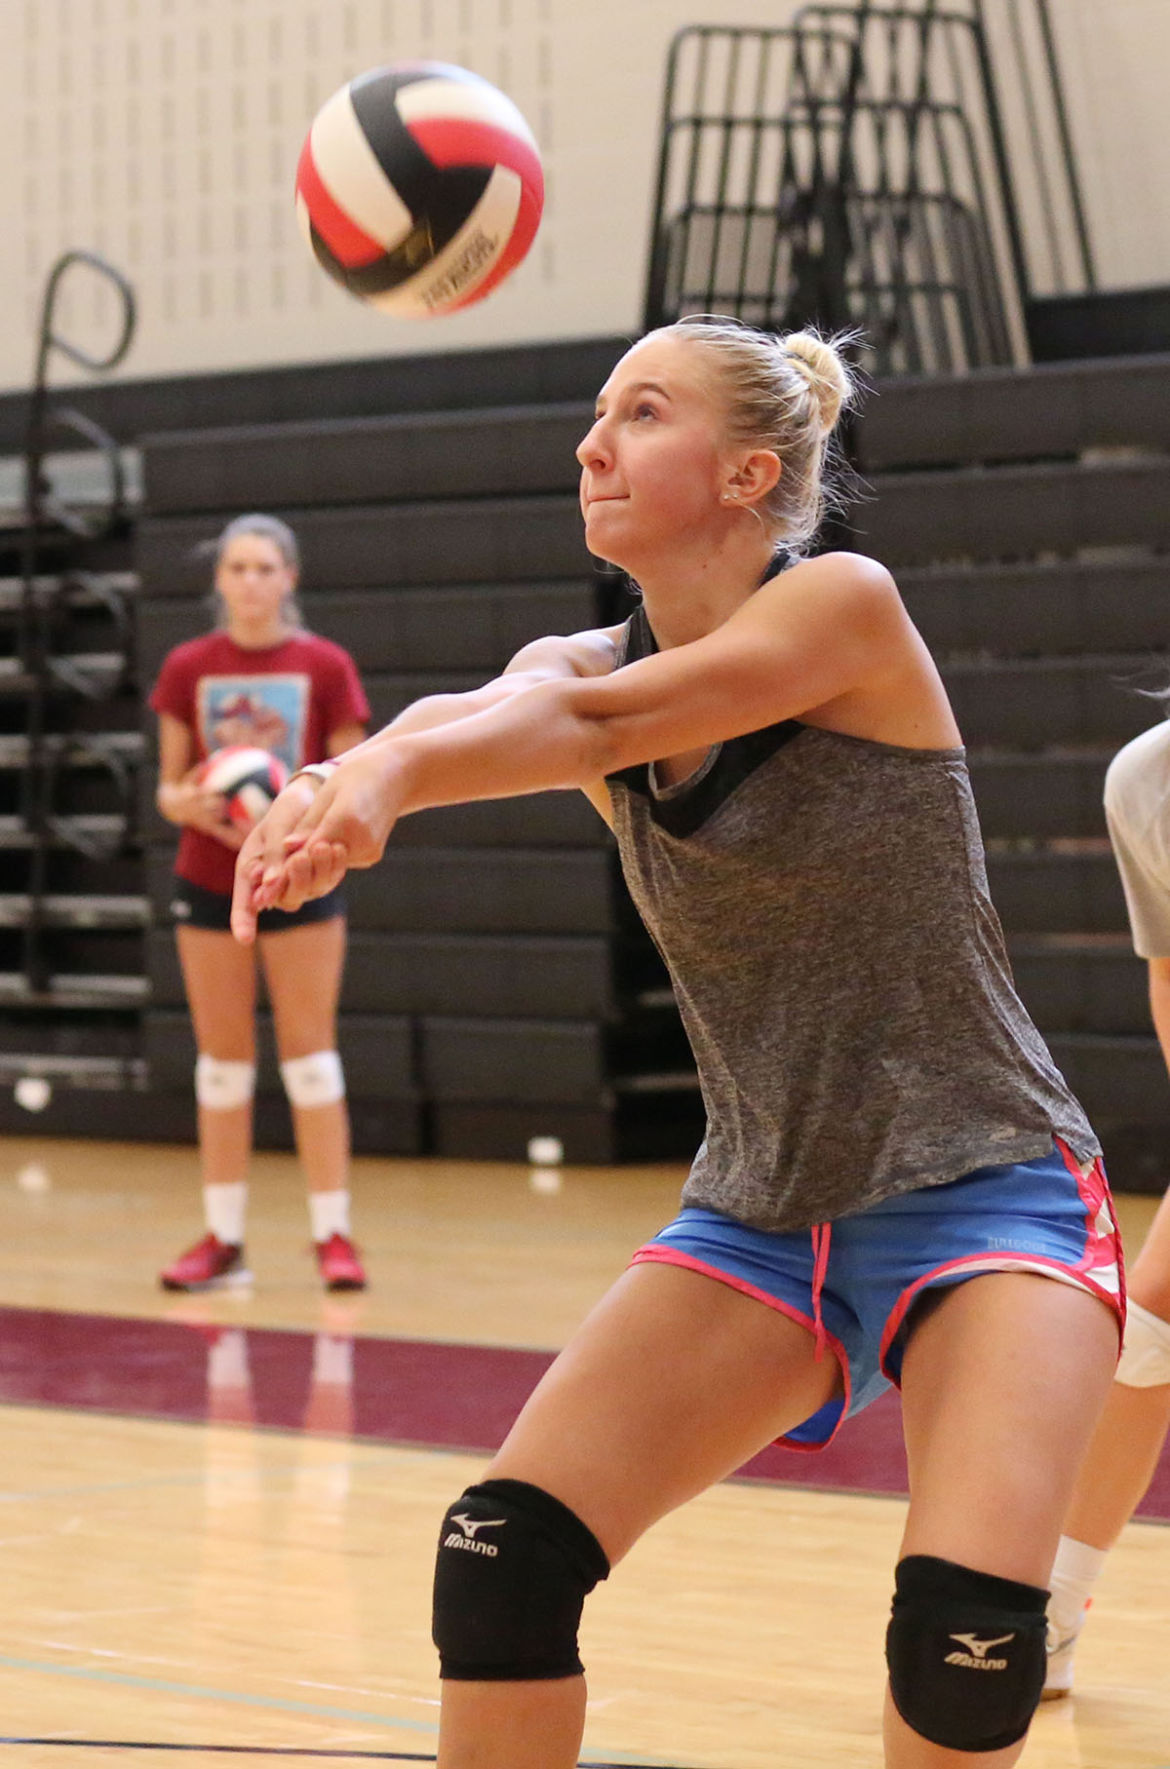 Photos: Scottsbluff High School Volleyball Practice | Sports News | starherald.com